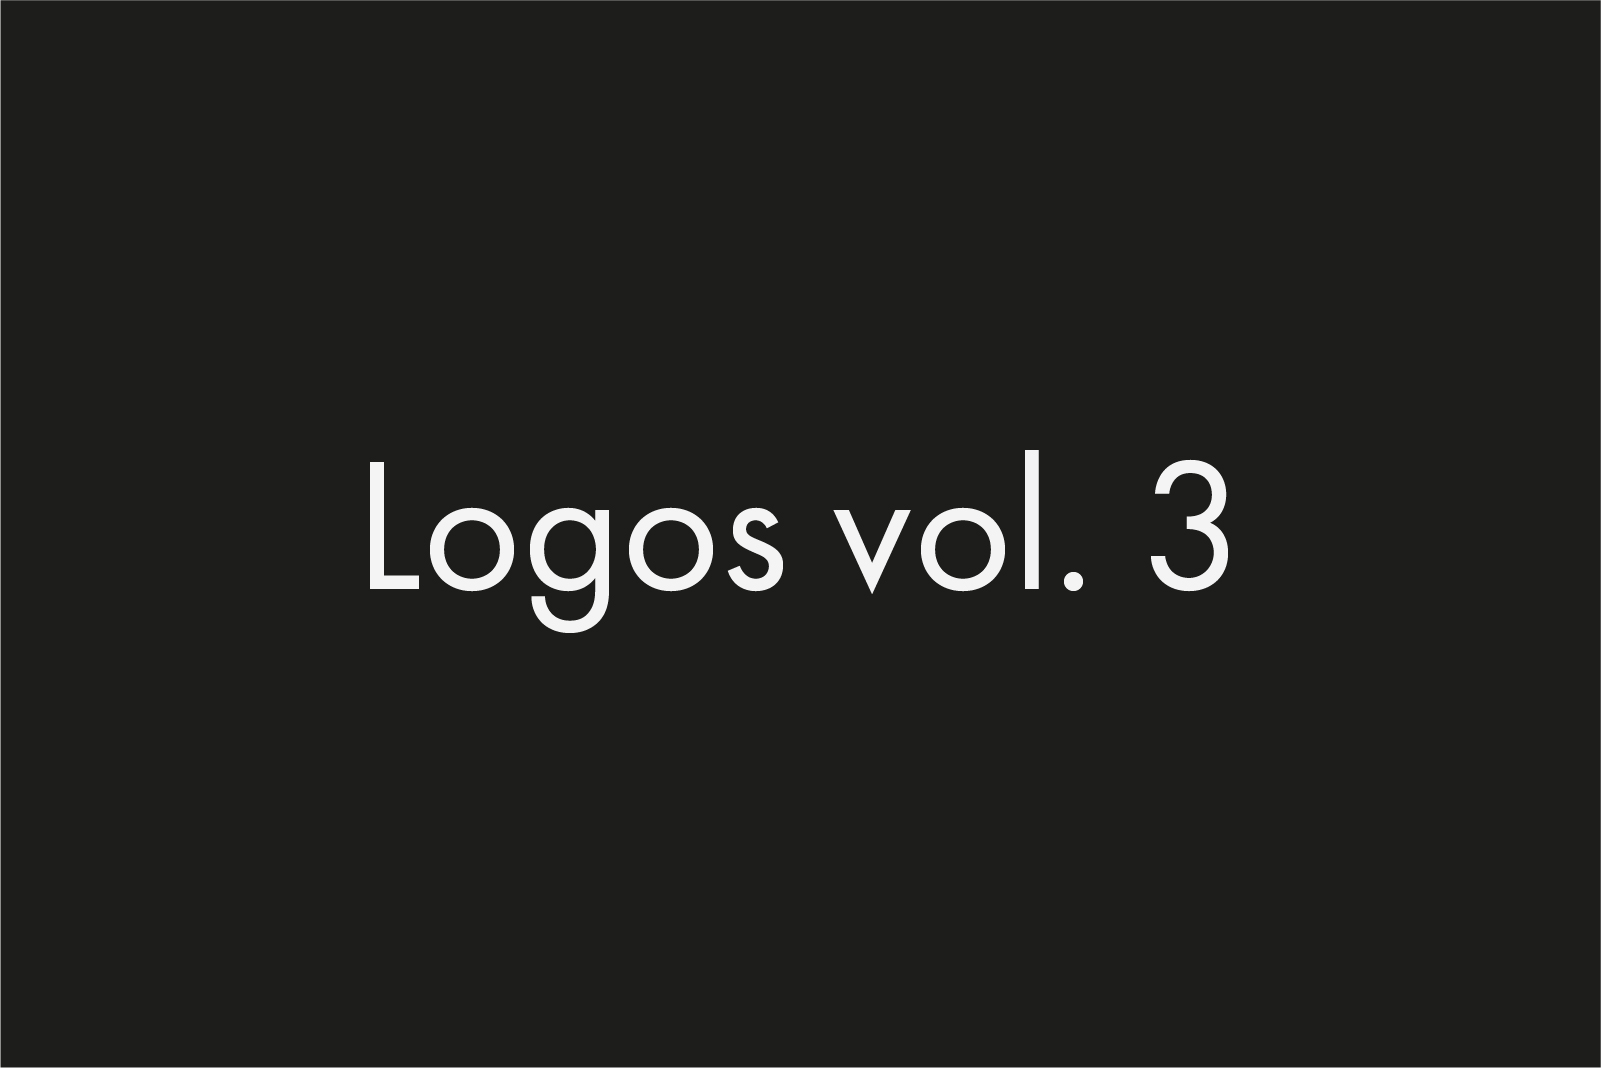 Logos vol. 3